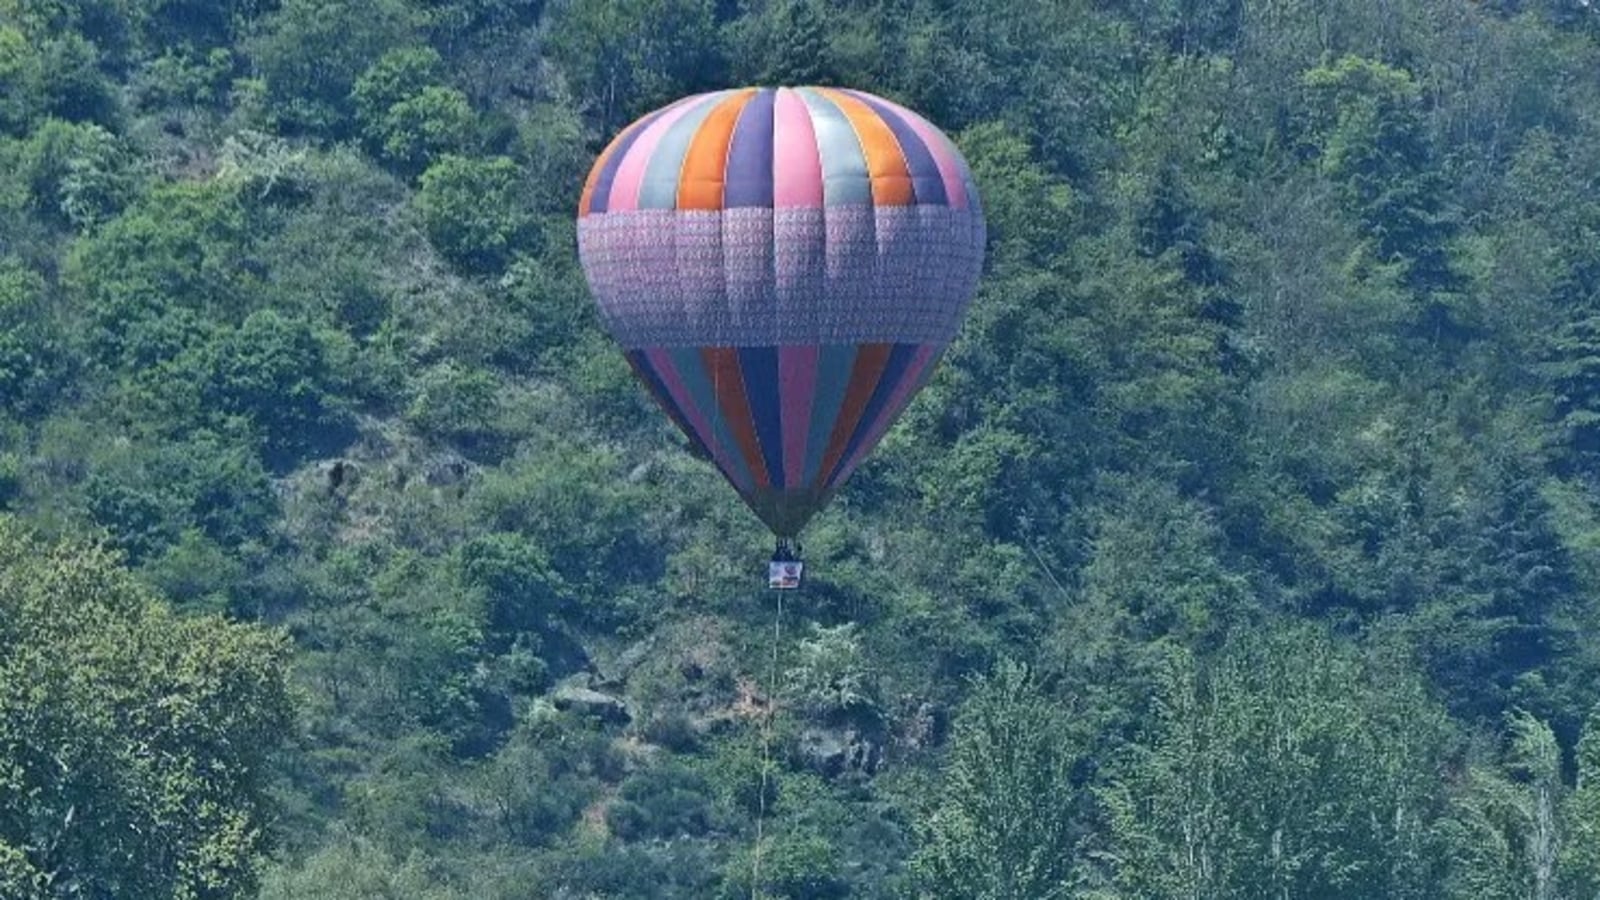 Srinagar's Zabarwan Park hosts hot air balloon rides, raise tourists' experience